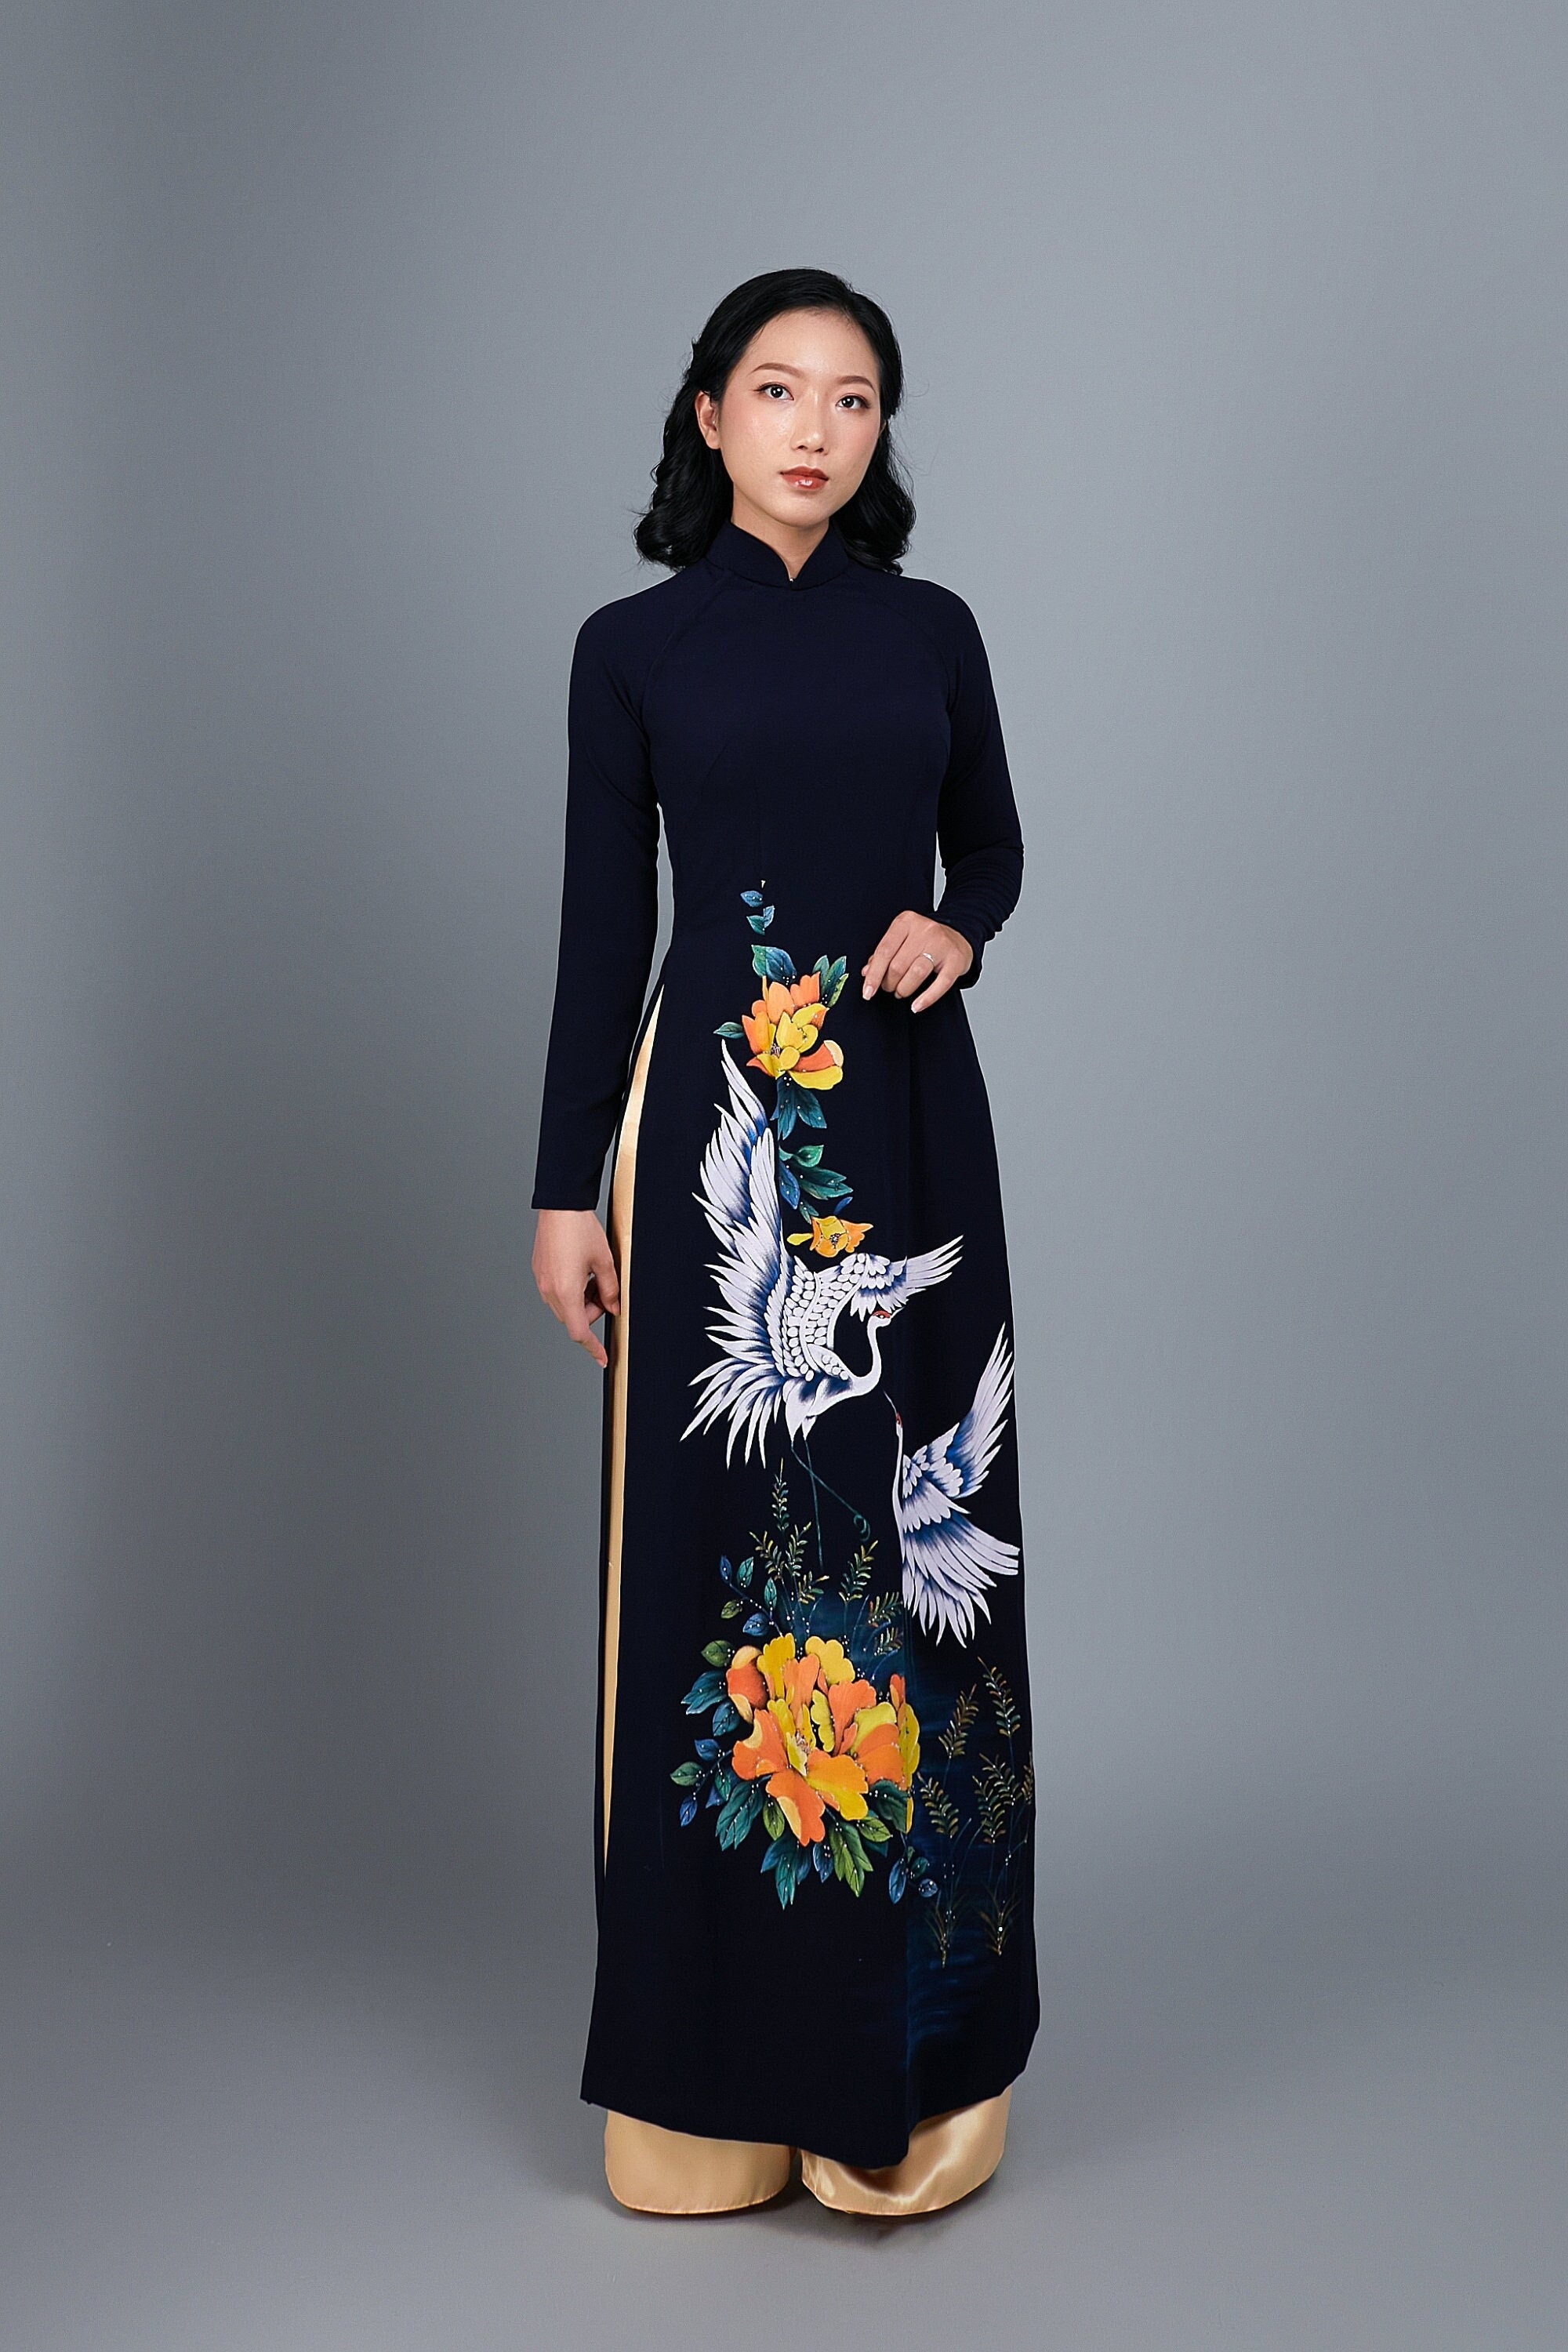 Ao dai: Traditional Vietnamese dress of grace and beauty - CGTN